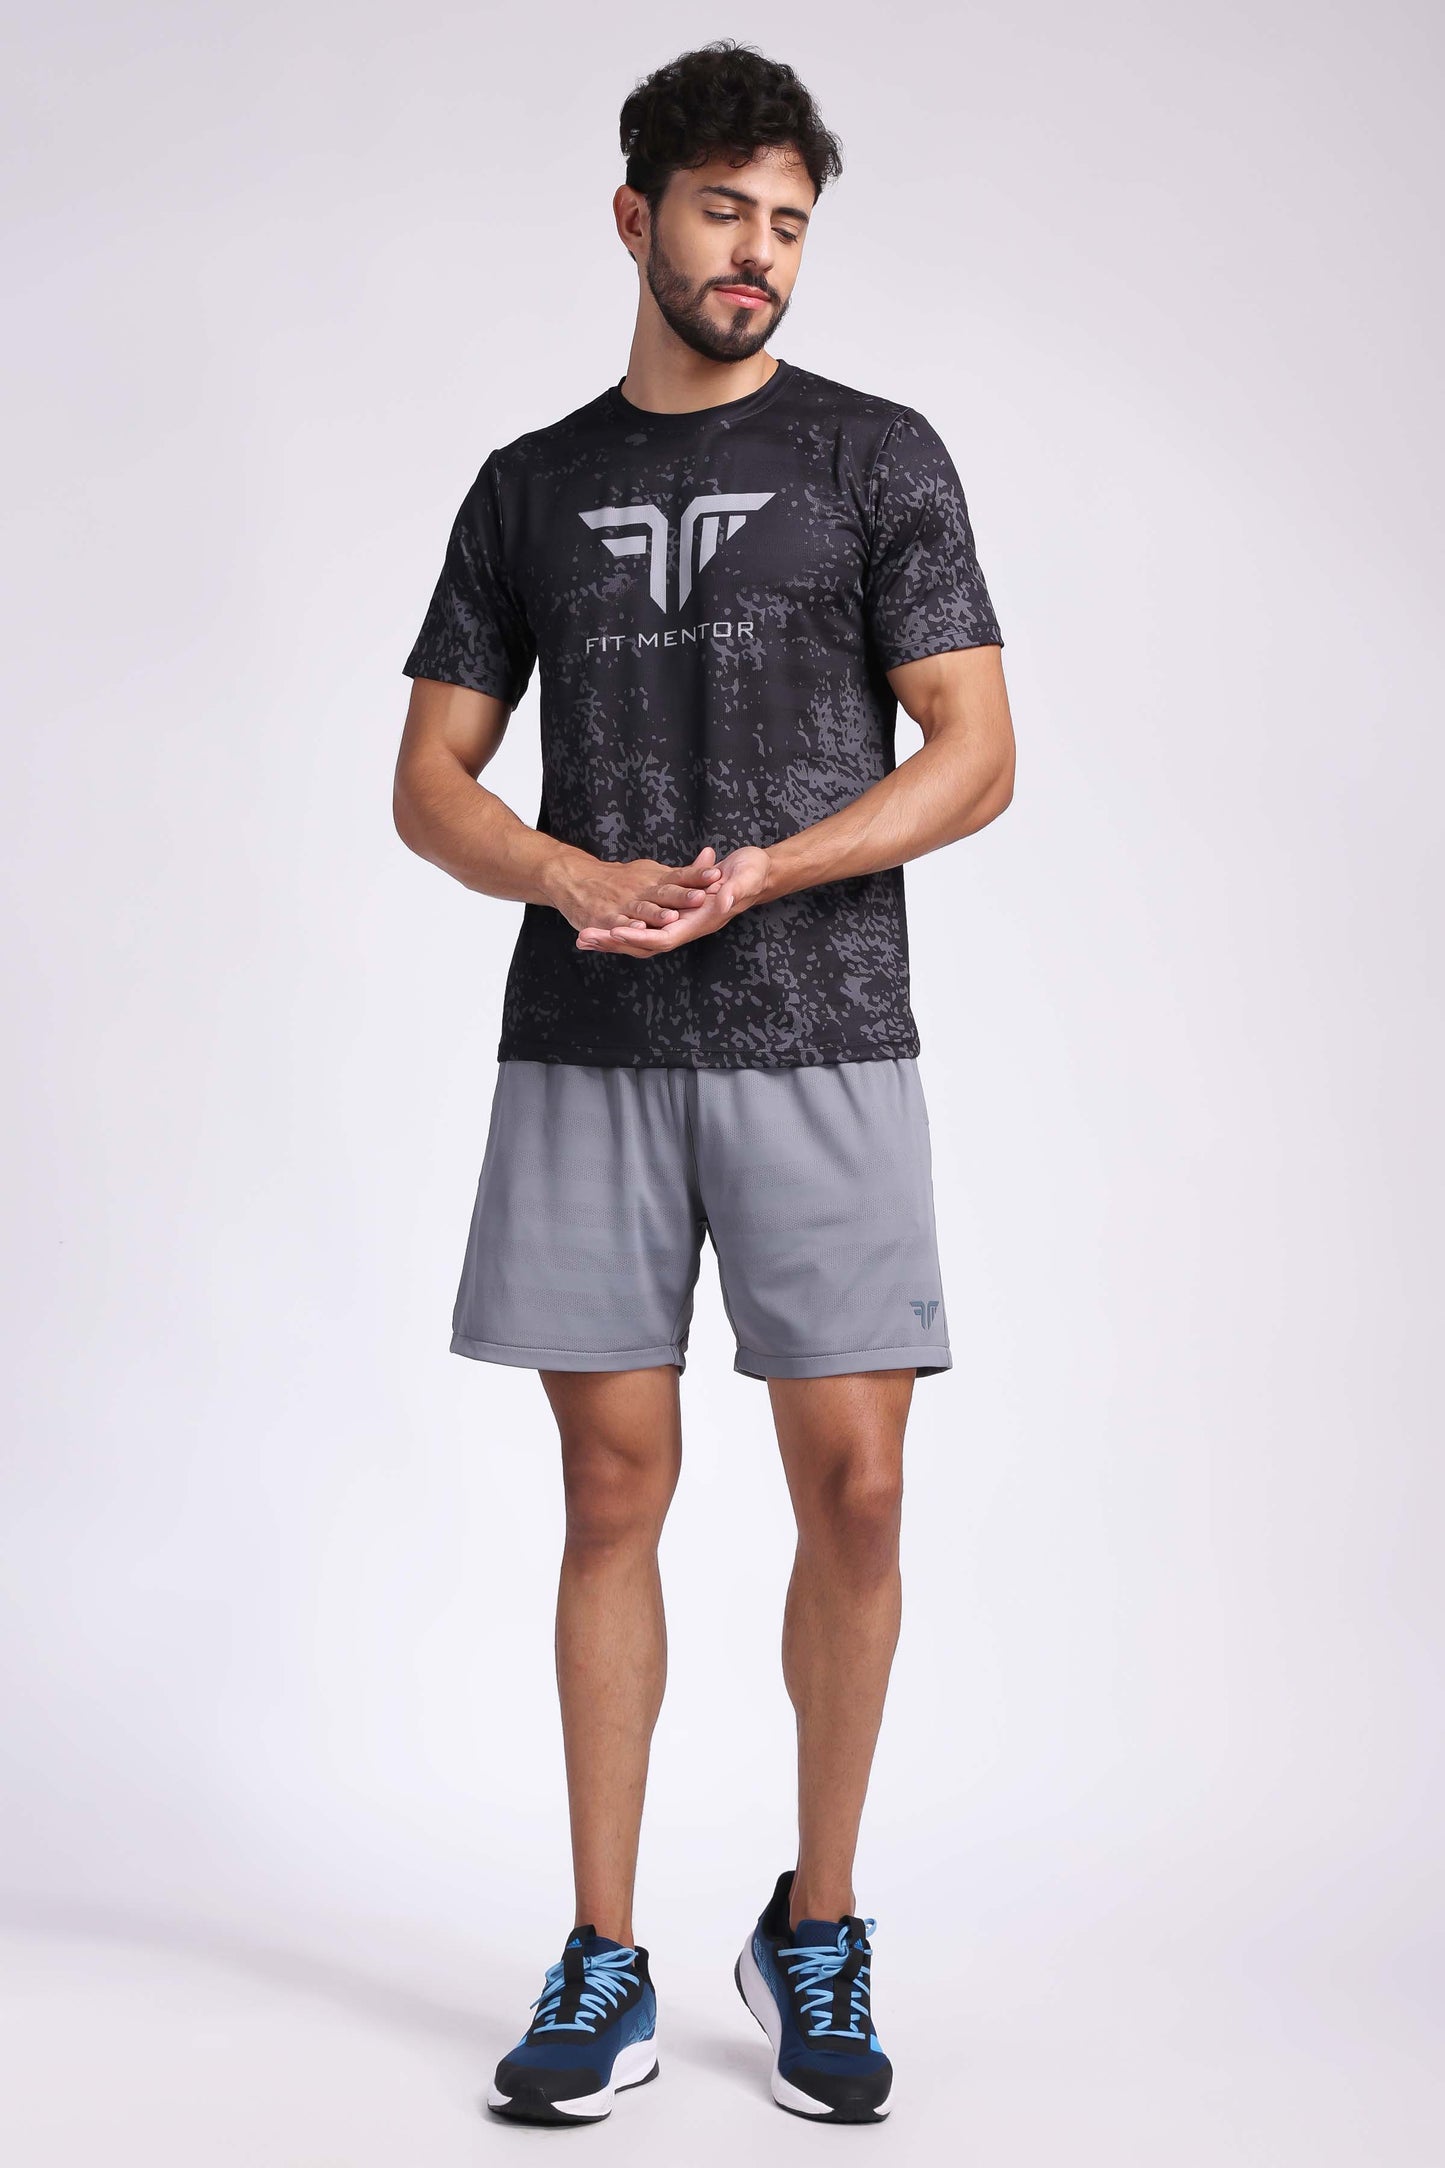 Men's Travel Shorts - Grey